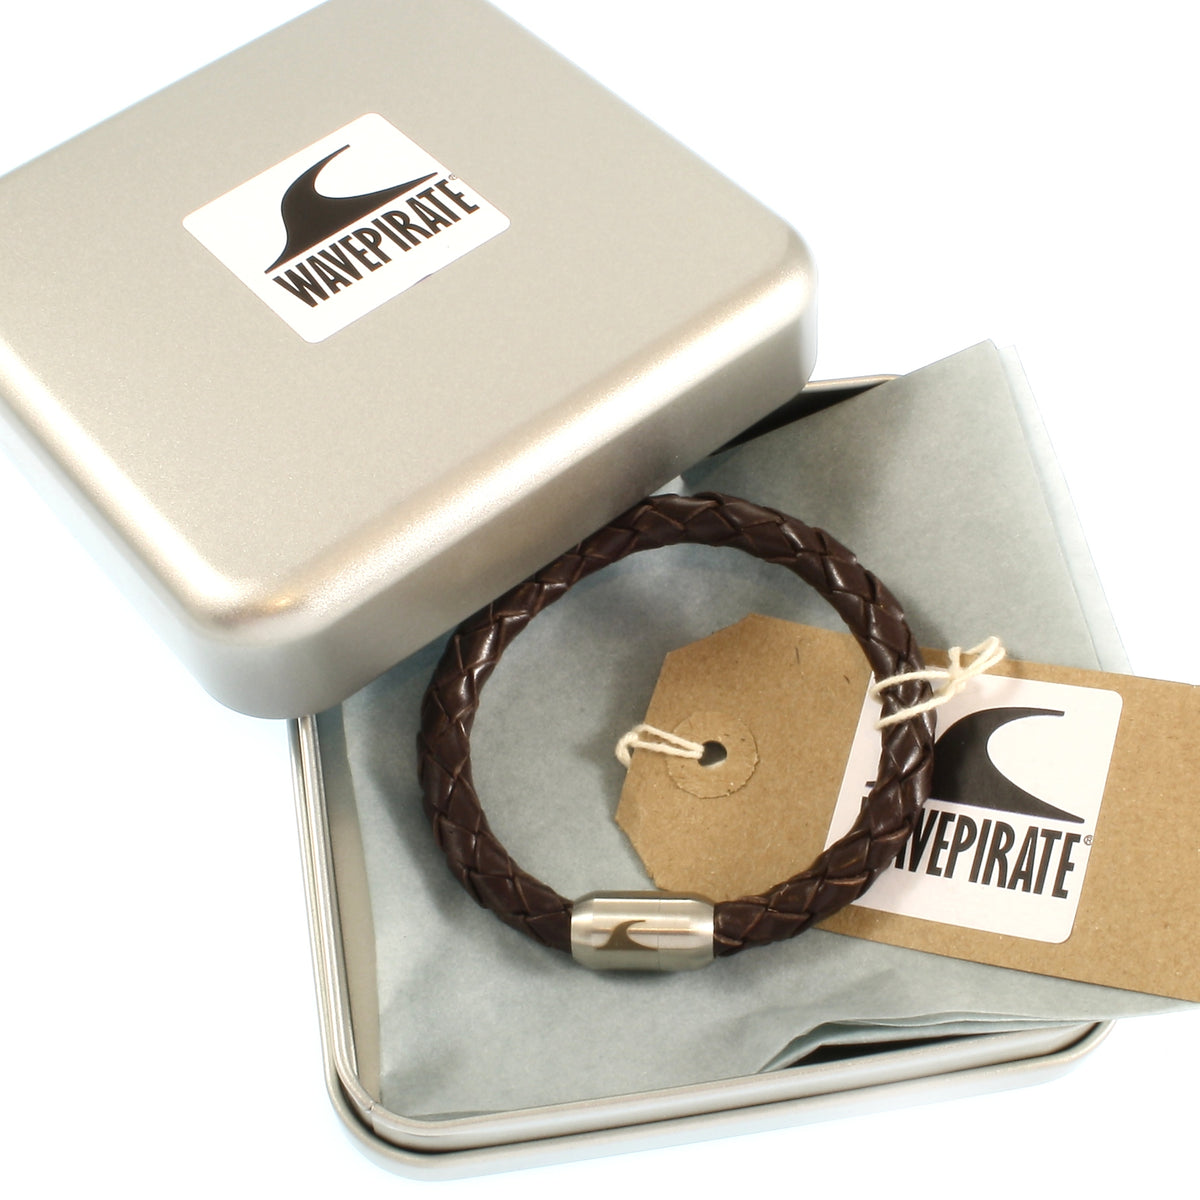 Herren-Leder-Armband-Fuerte-braun-geflochten-Edelstahlverschluss-geschenkverpackung-wavepirate-shop-f